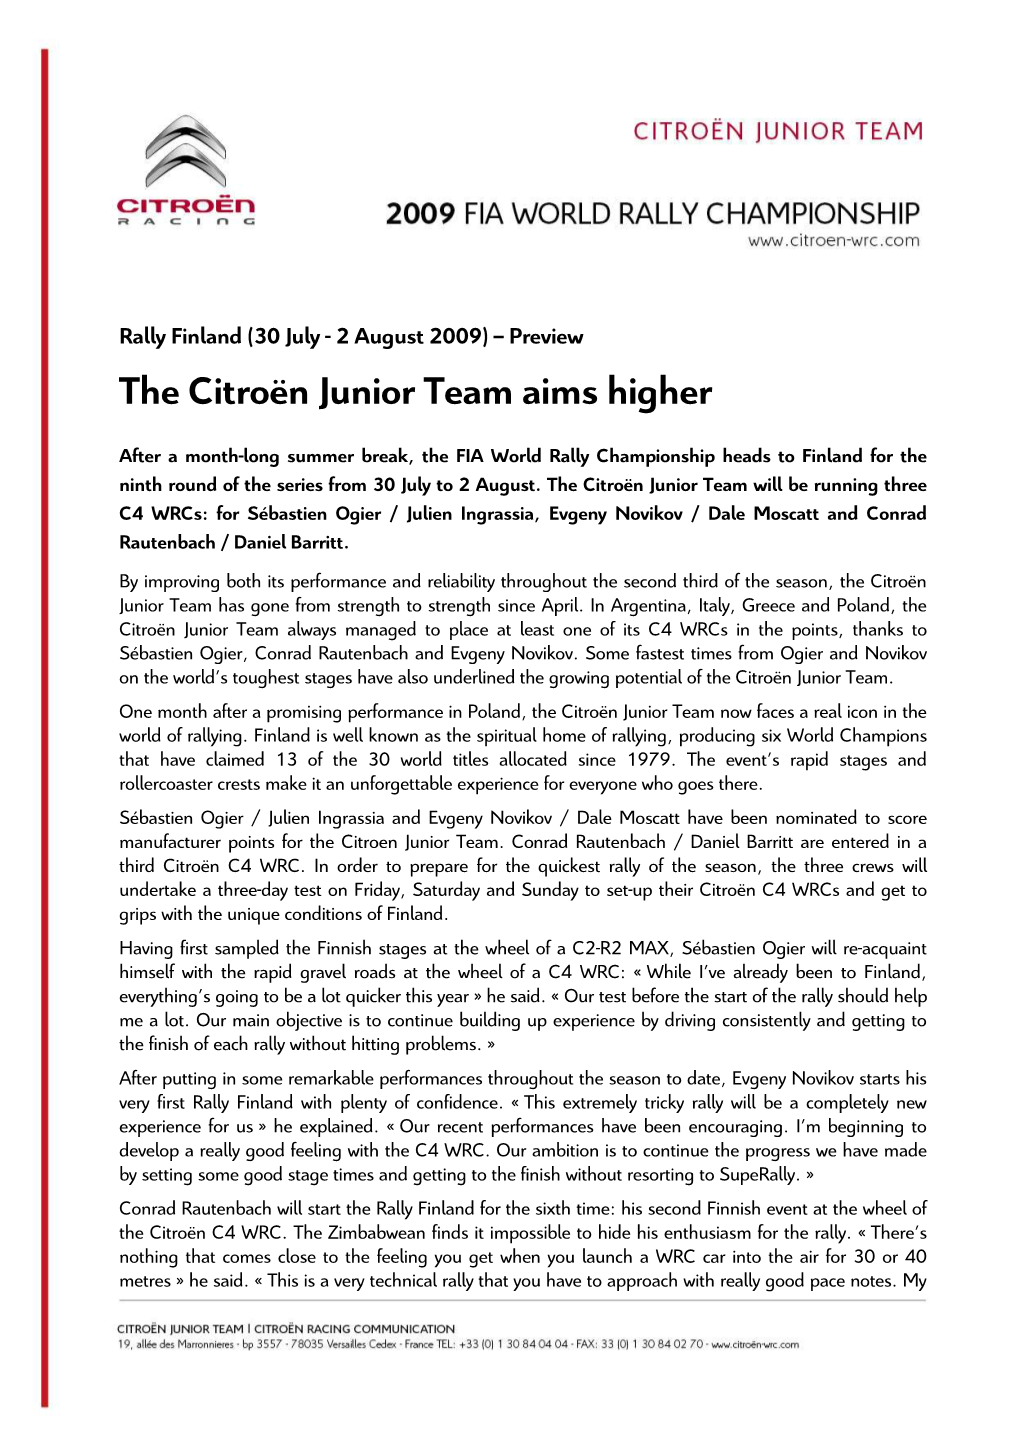 The Citroën Junior Team Aims Higher